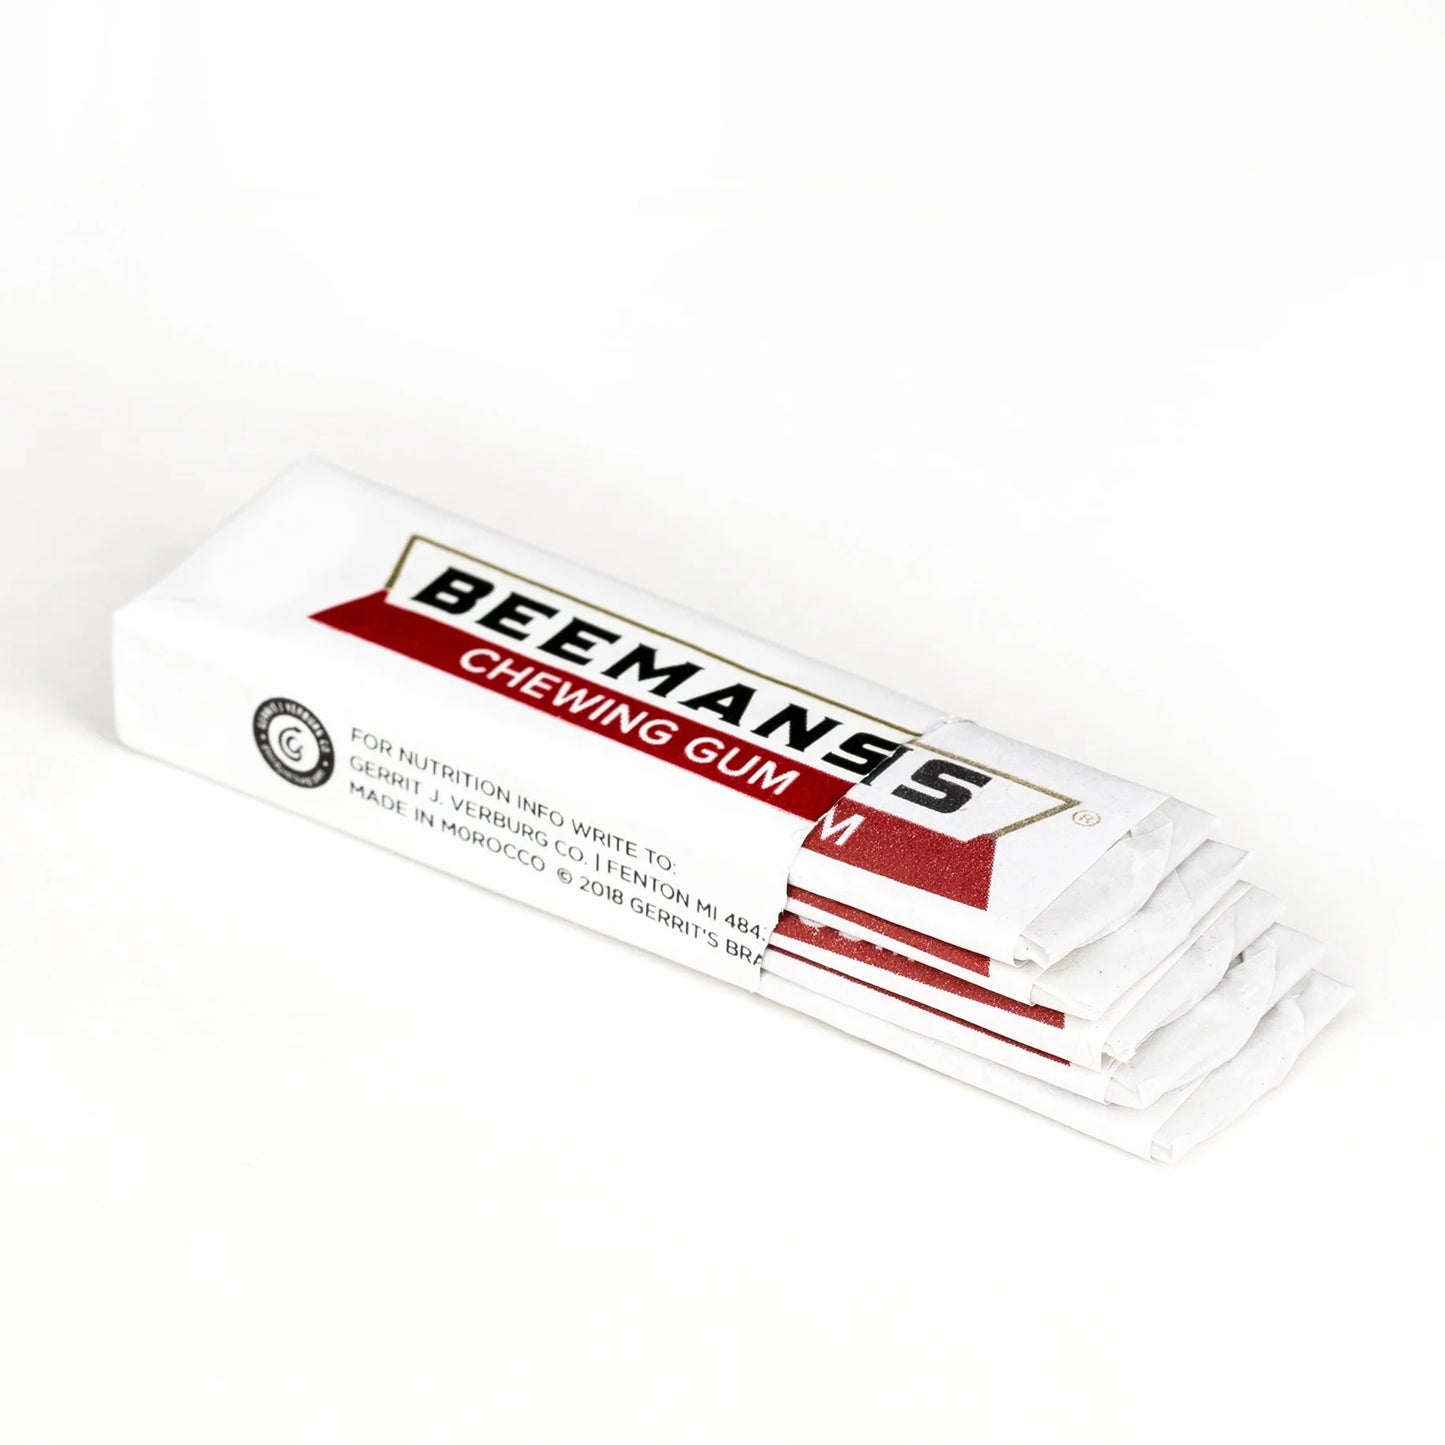 Beemans Gum - 5 Stick Pack